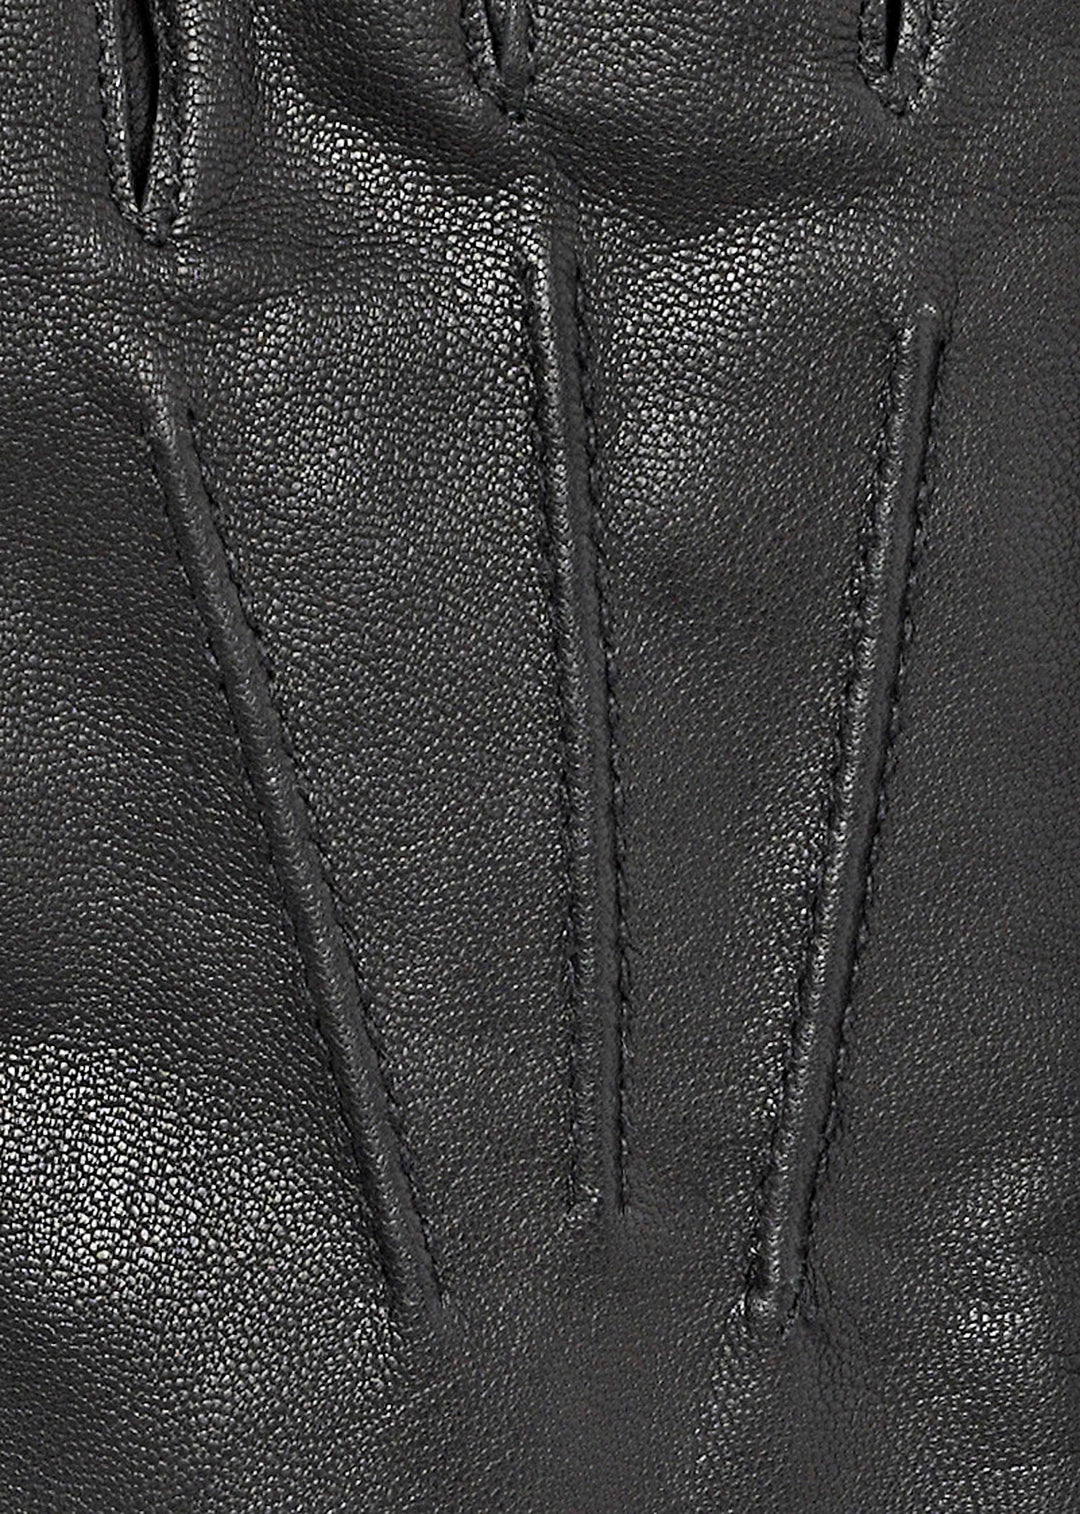 M1 Goat leather black